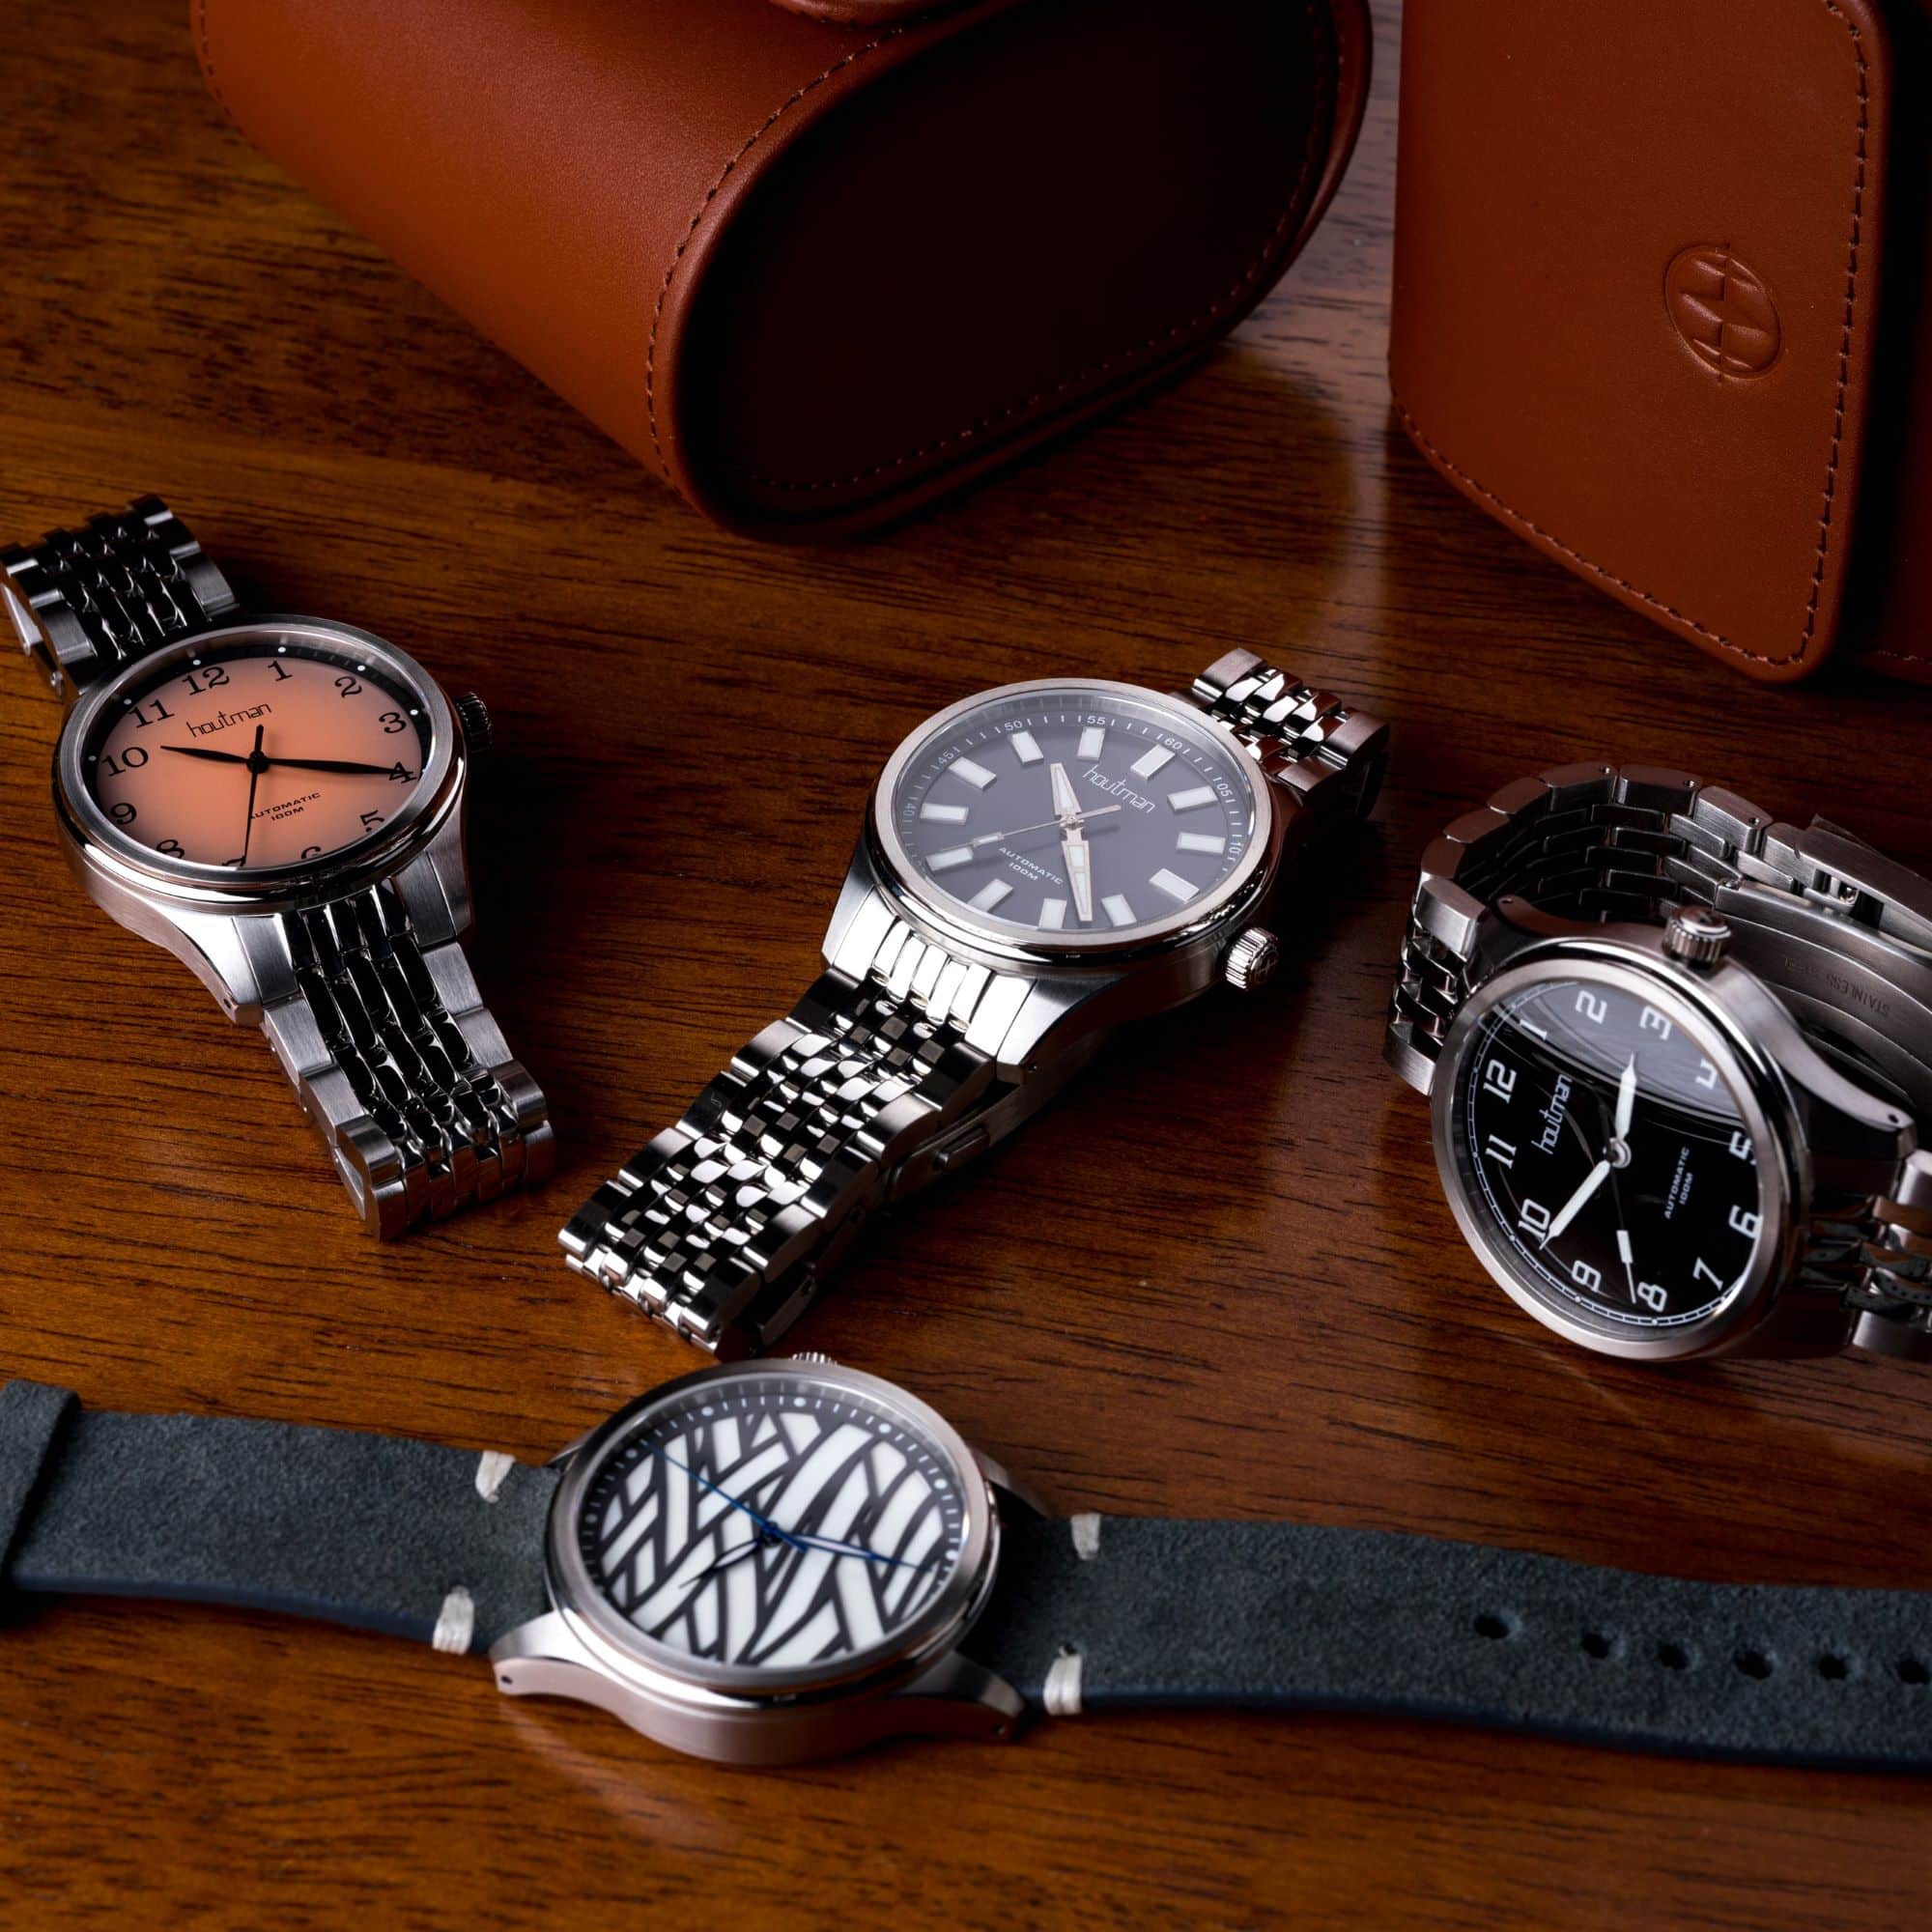 Field watch, sport watch, aviator watch, and special lume watch sitting on wooden desk